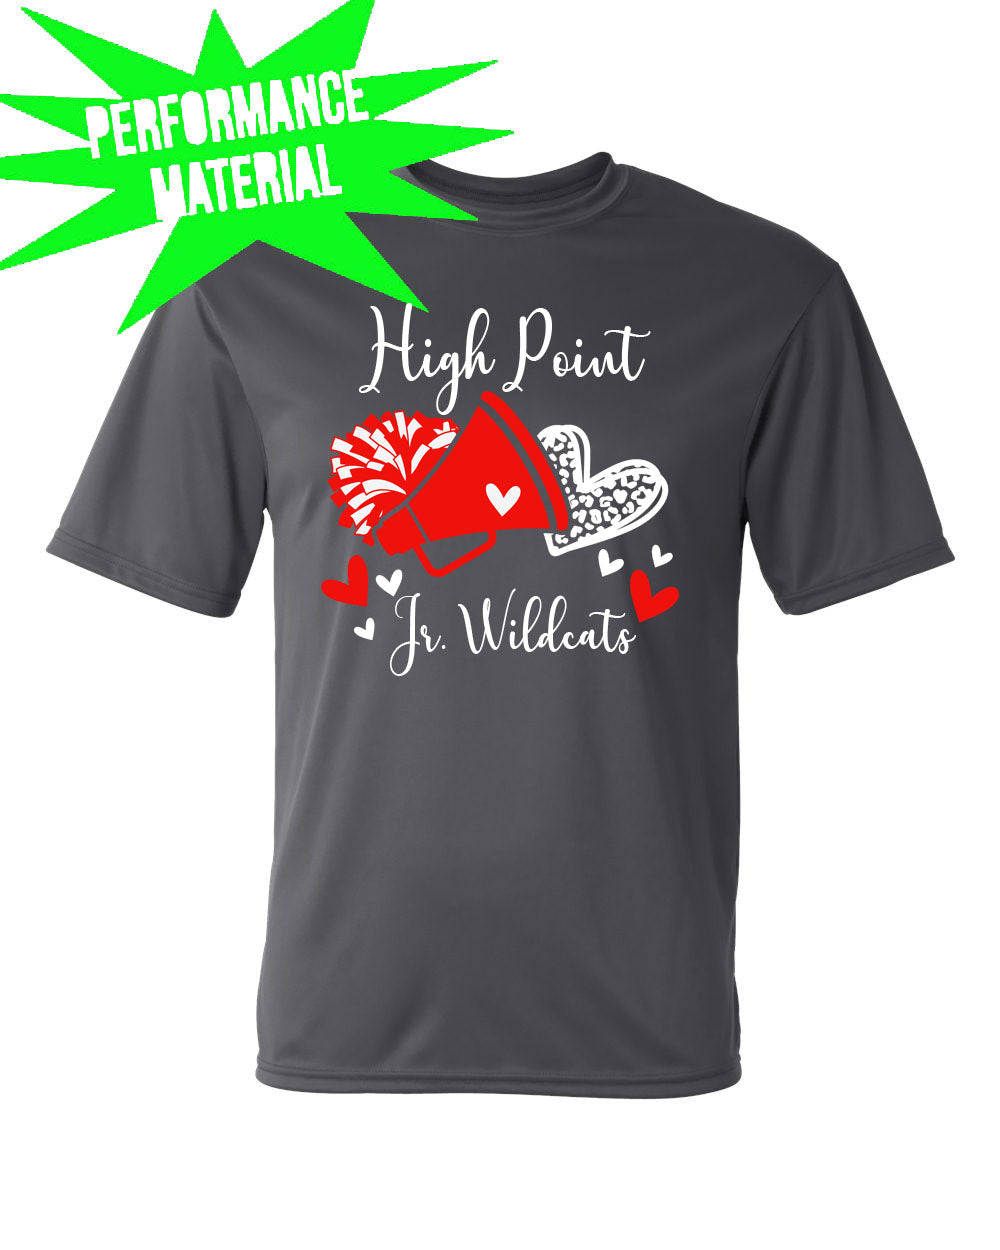 High Point Cheer Performance Material design 6 T-Shirt